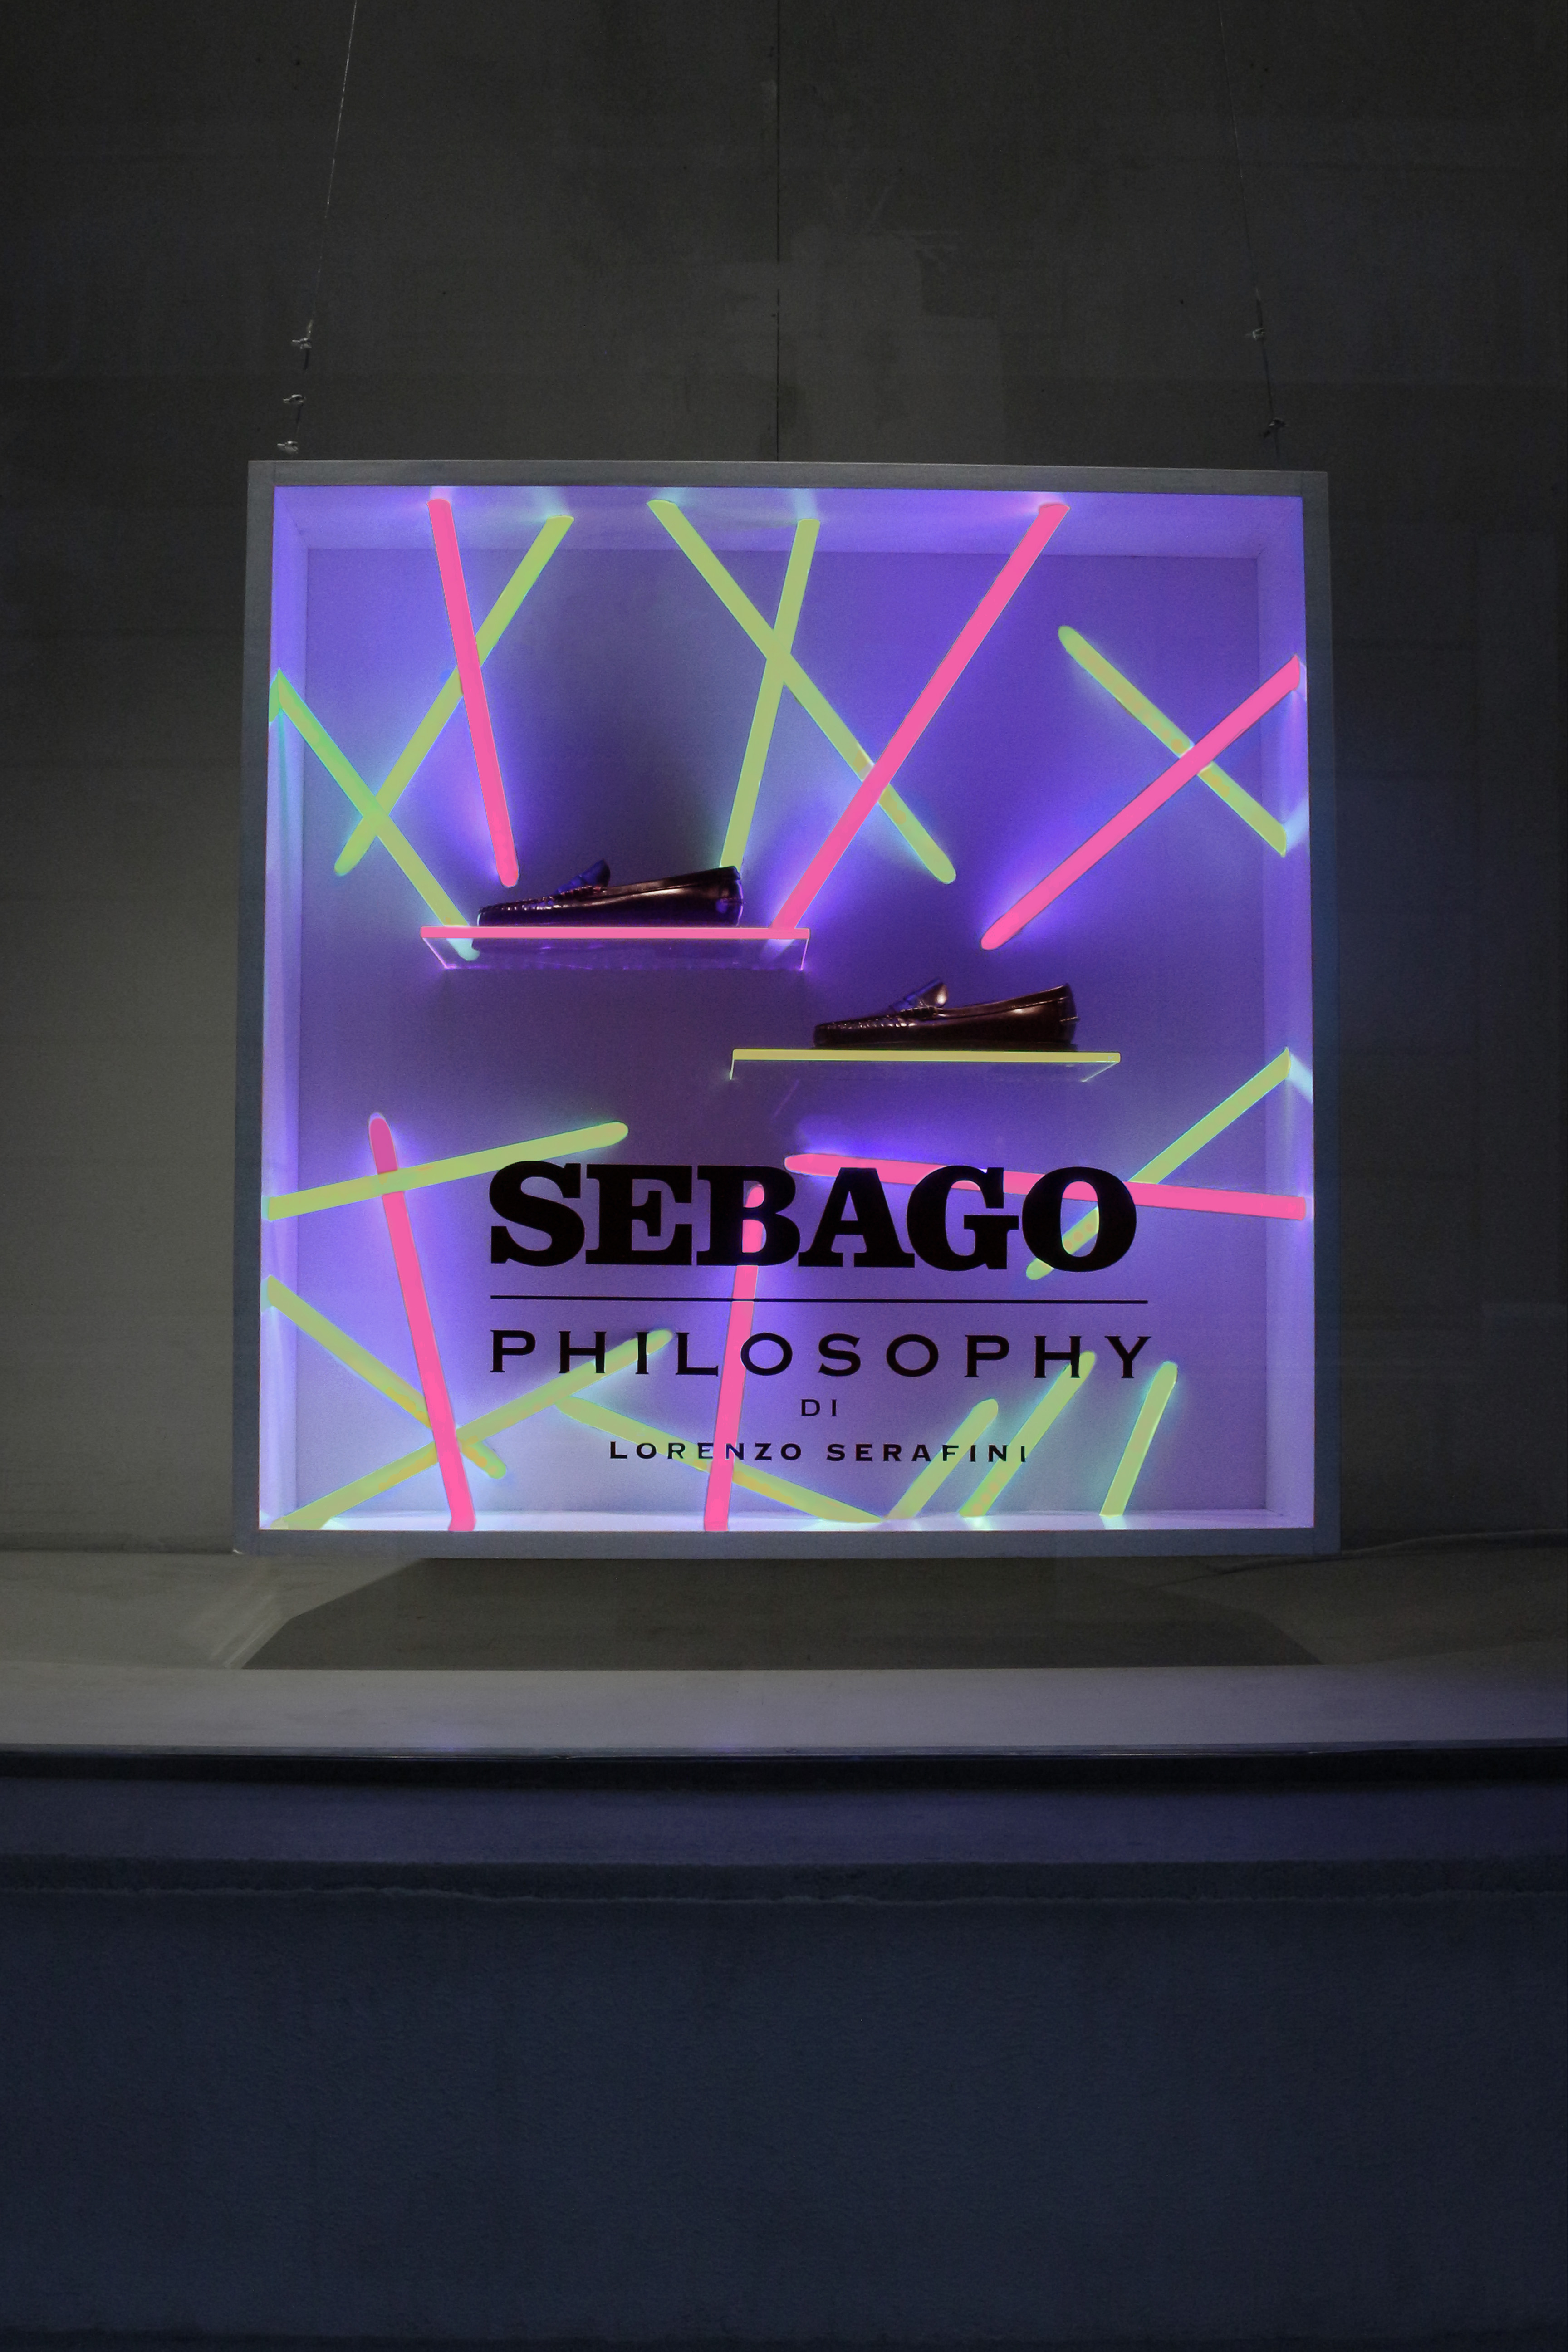 Sebago x Philosophy_2.jpg